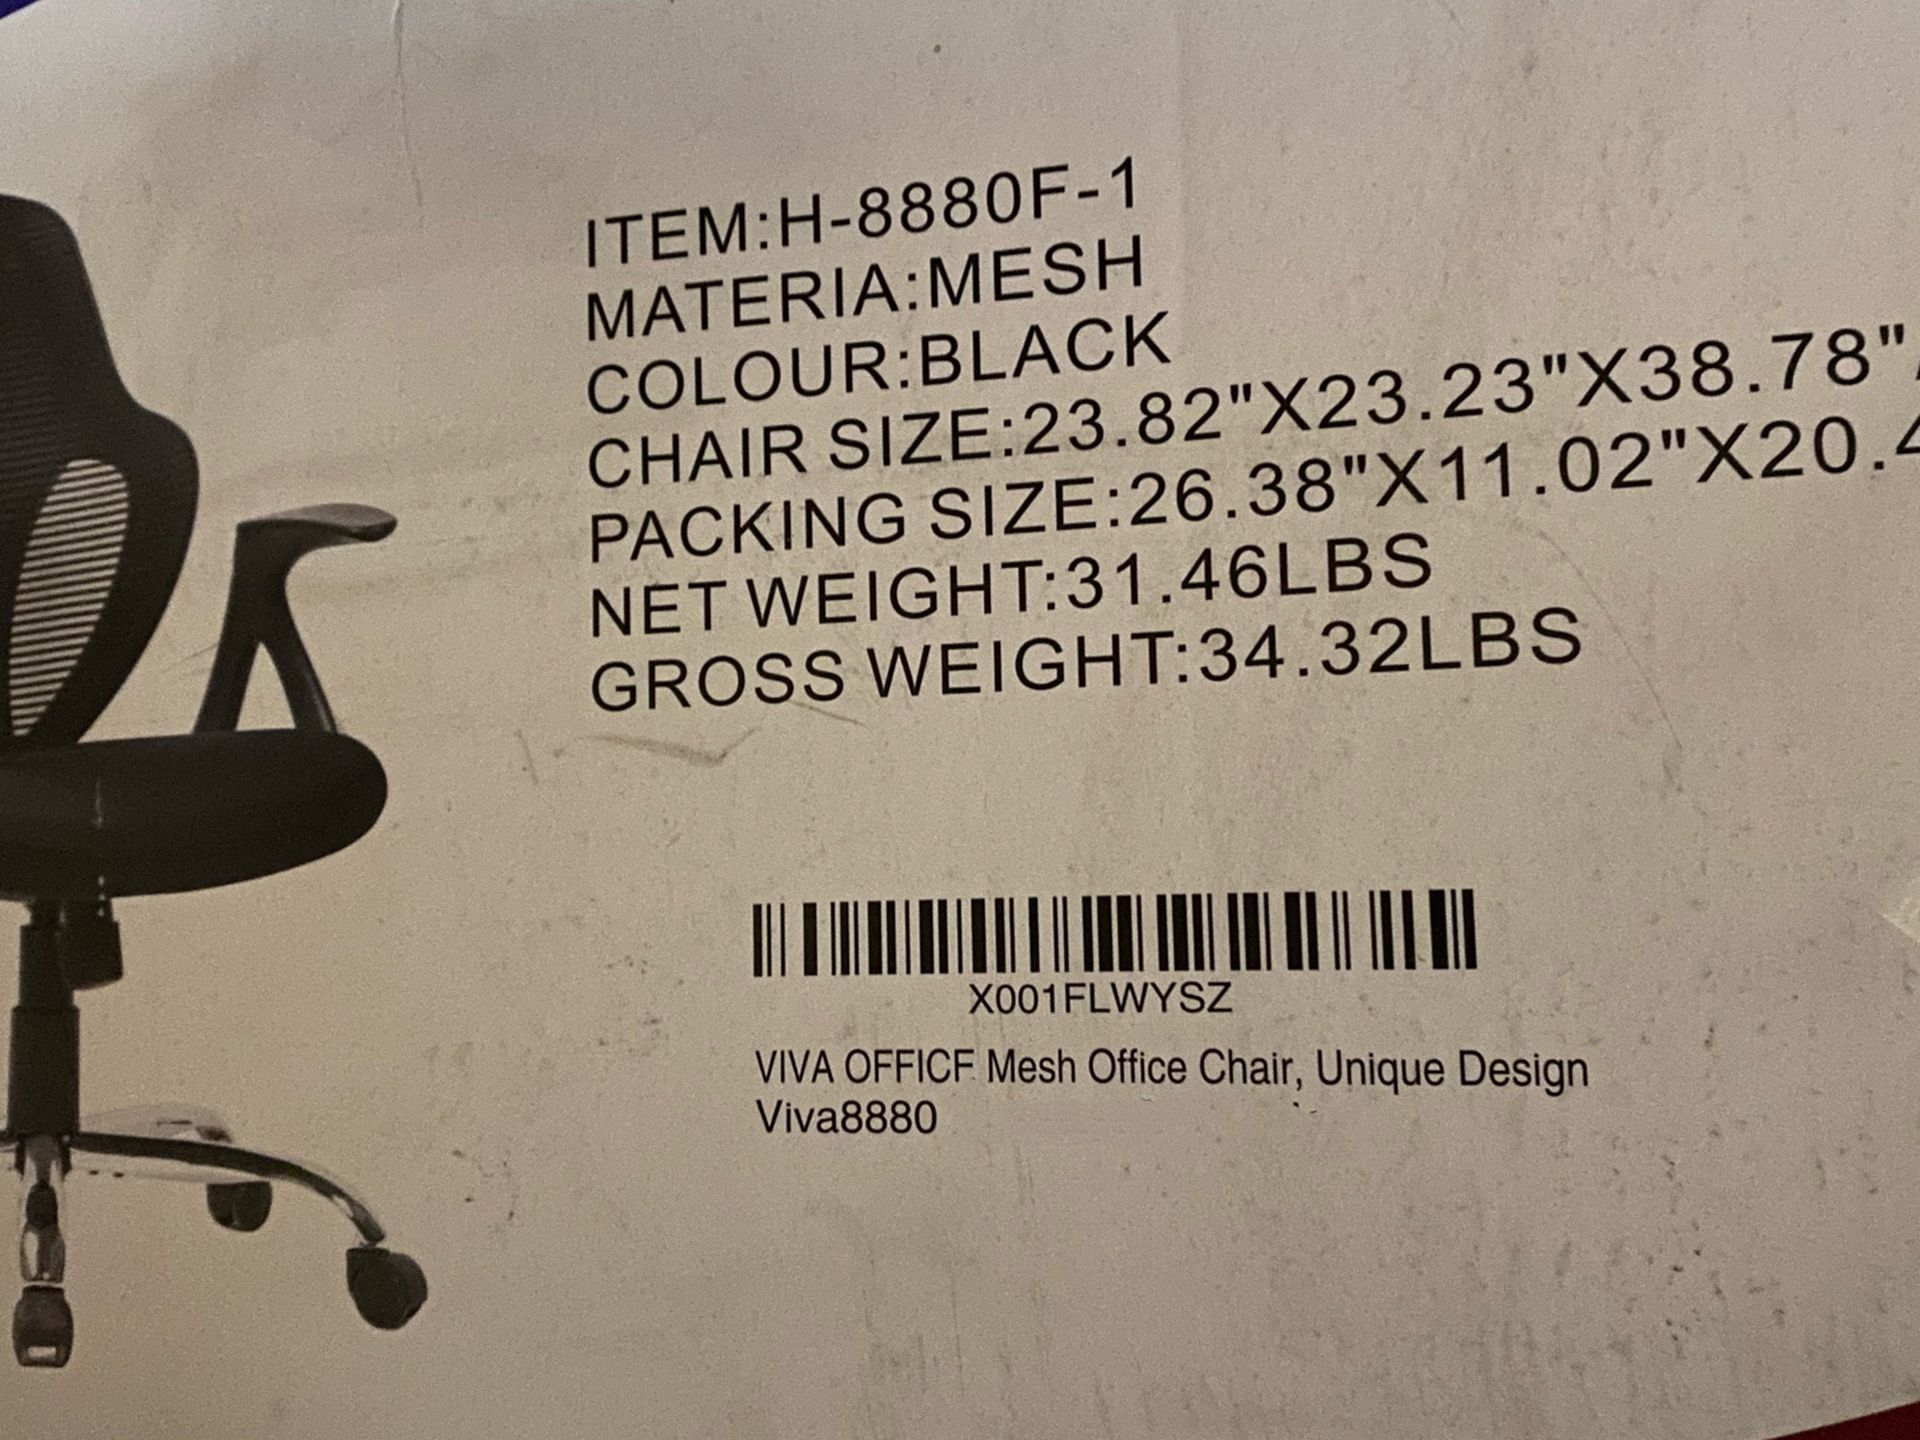 VIVA OFFICE Mesh Office Chair, Unique Design Viva8880